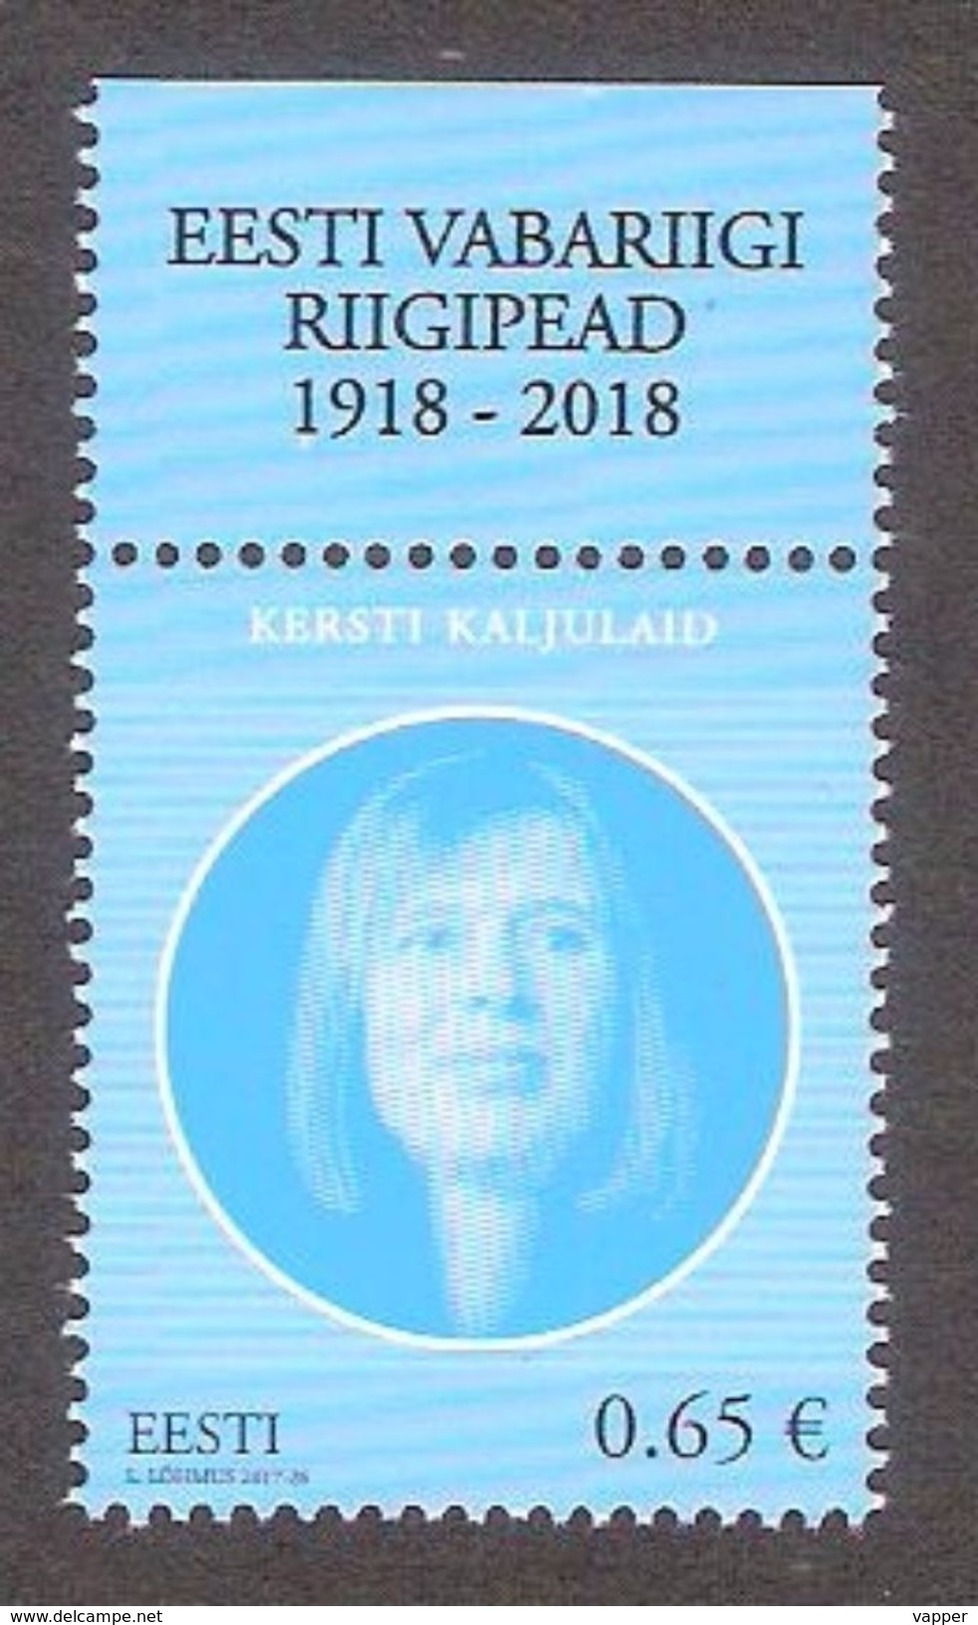 Kersti Kaljulaid President Of The Republic Of Estonia 2017 Estonia MNH  Stamp + Label Mi 903 - Estonie